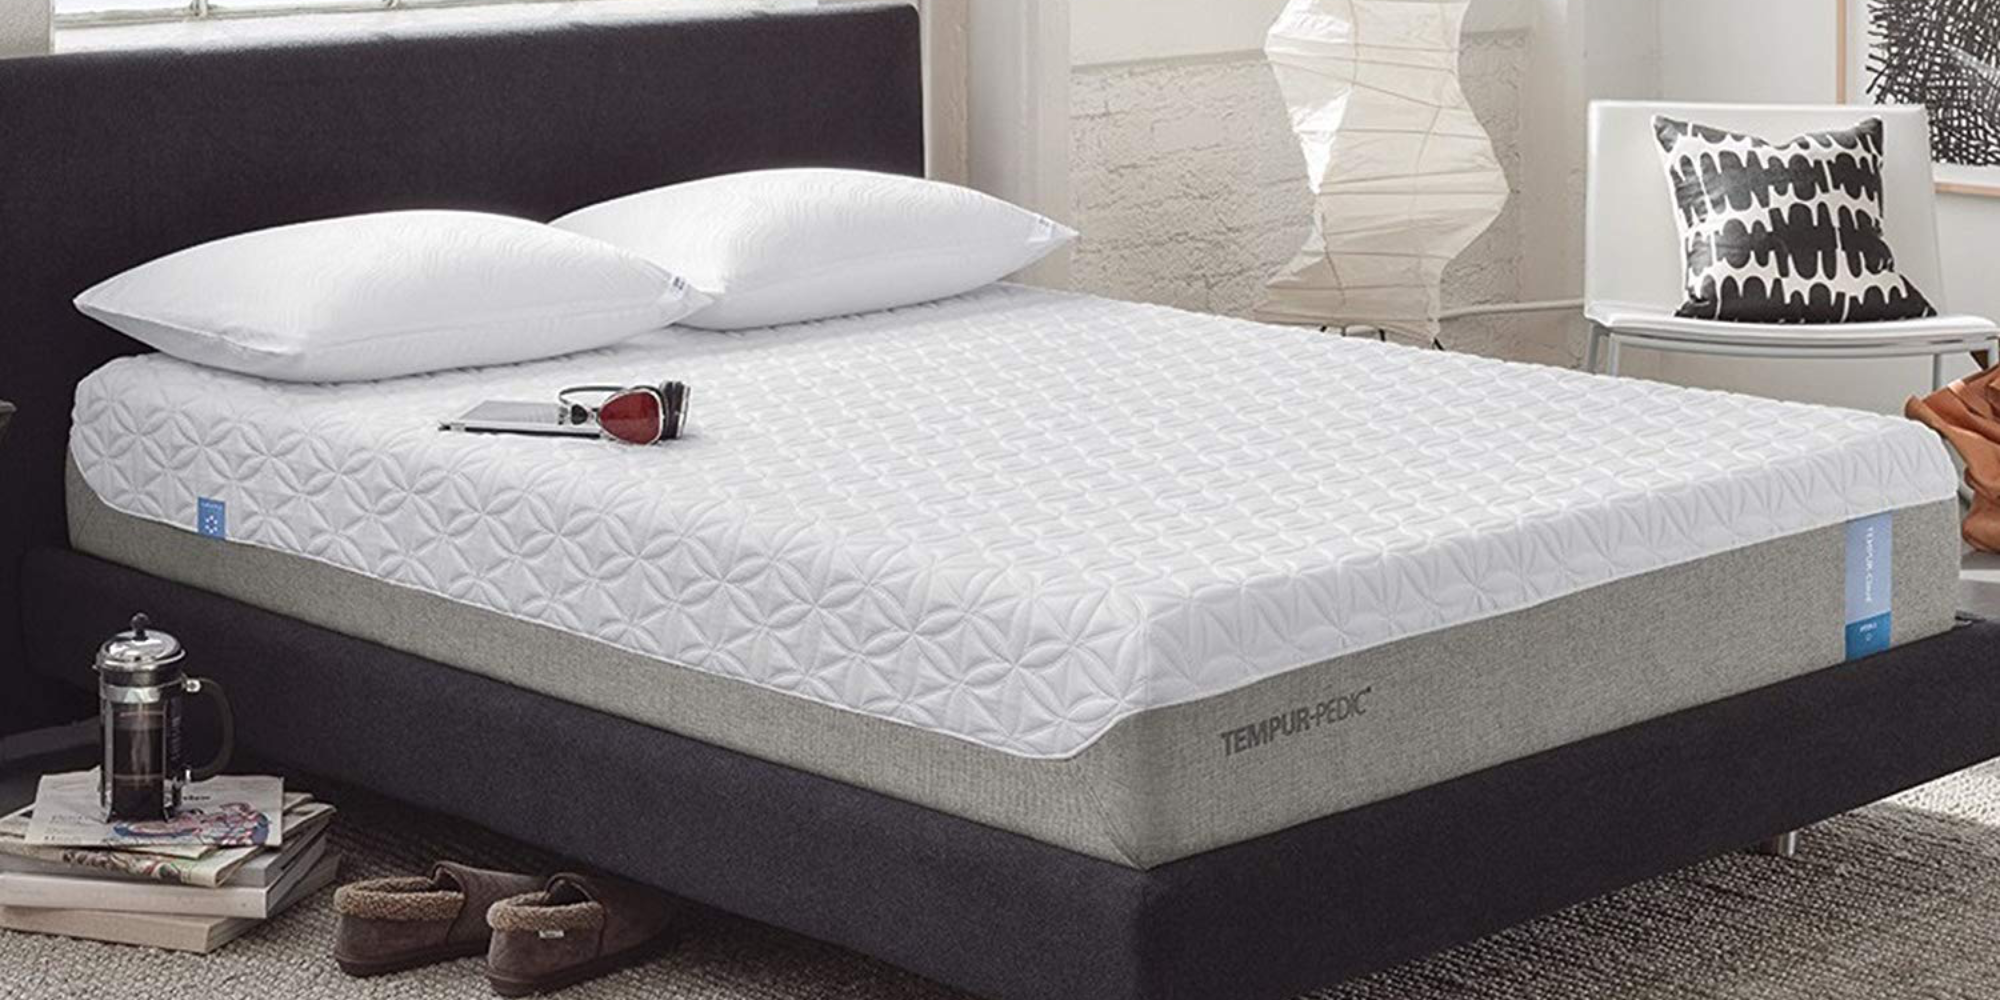 granrest 11 cloud memory foam mattress